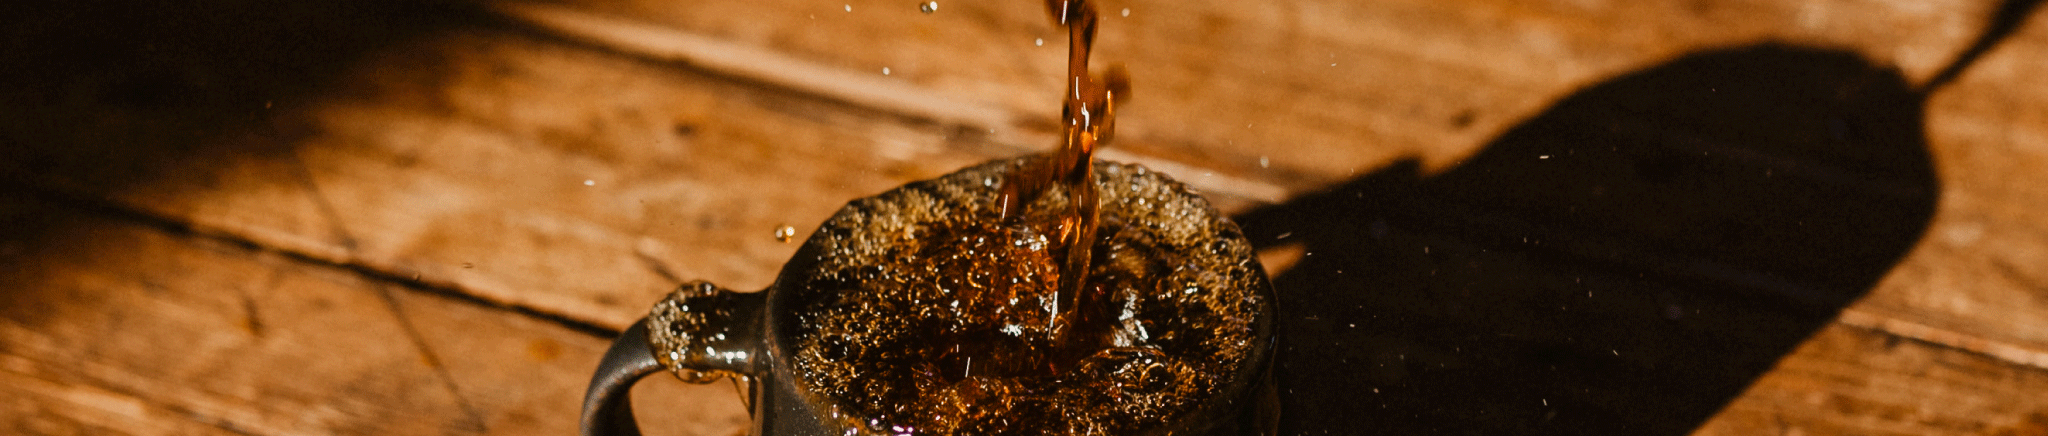 Coffee pouring into a mug and splashing